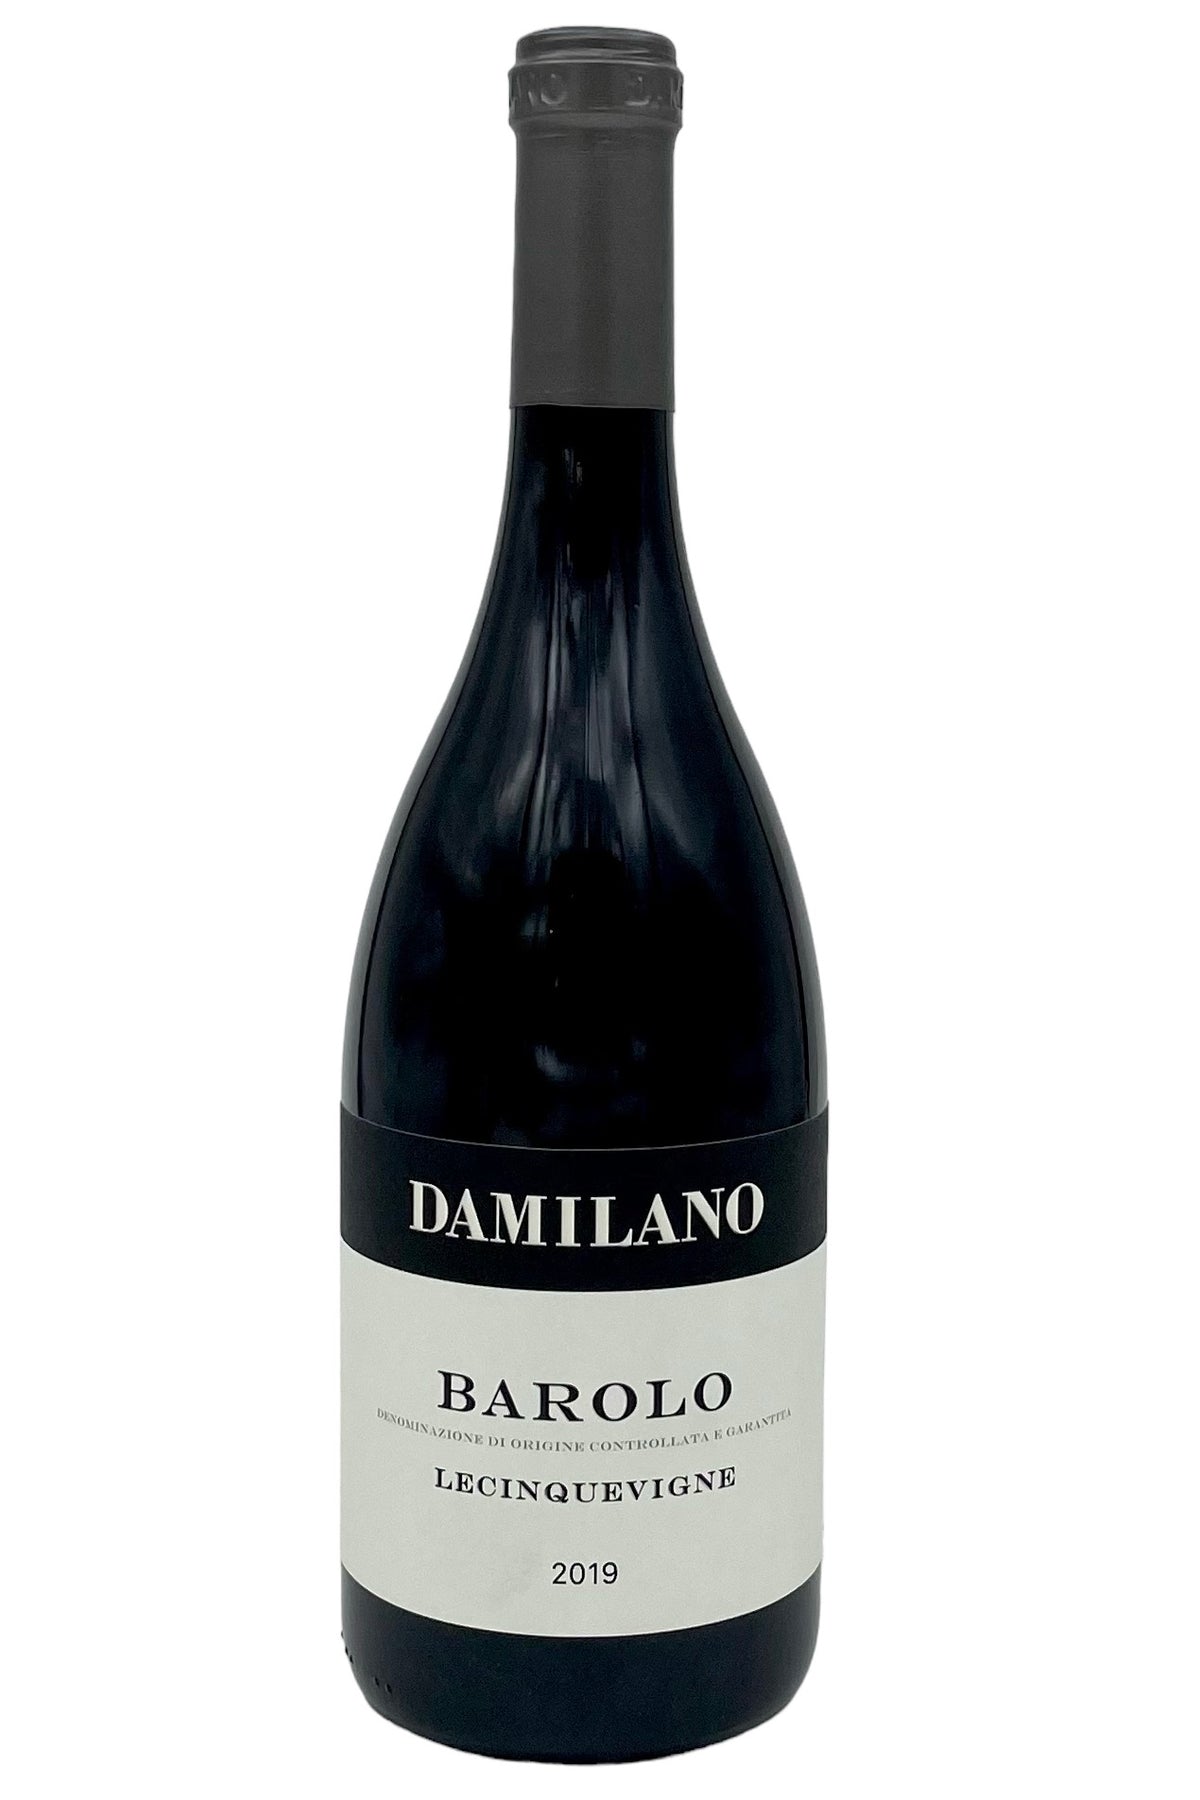 Damilano 2019 Barolo Lecinquevigne